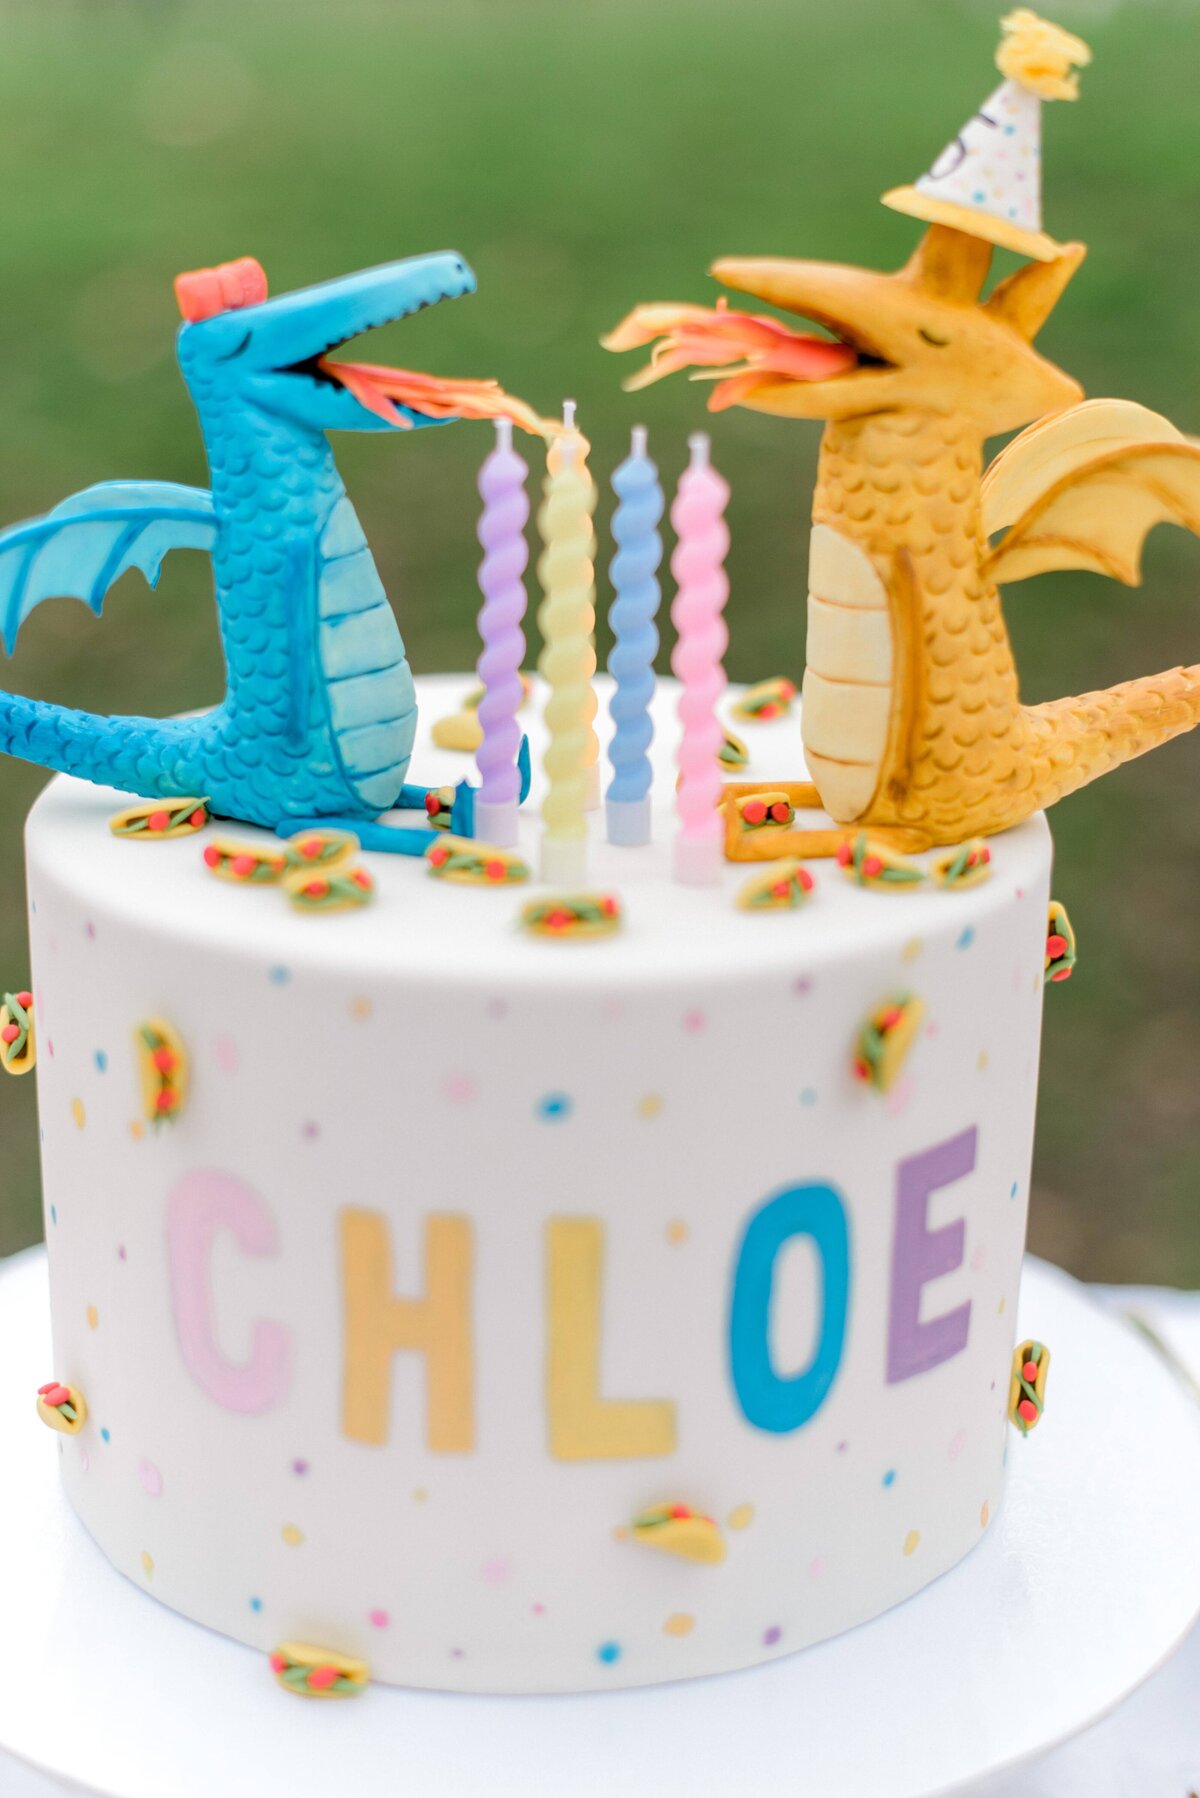 Dragon themed birthday cake